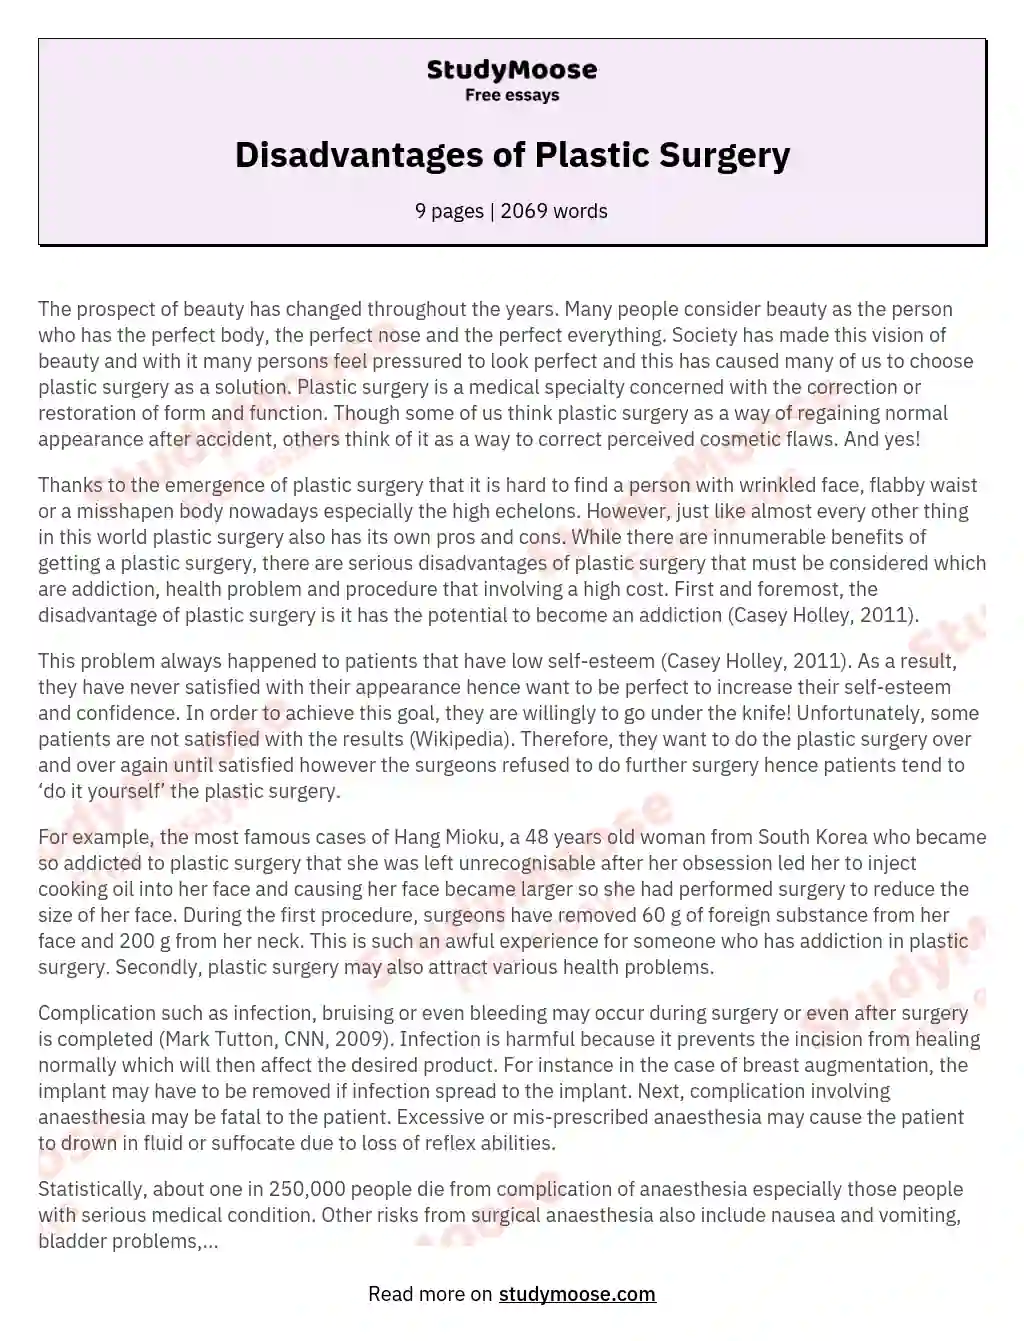 Disadvantages of Plastic Surgery essay